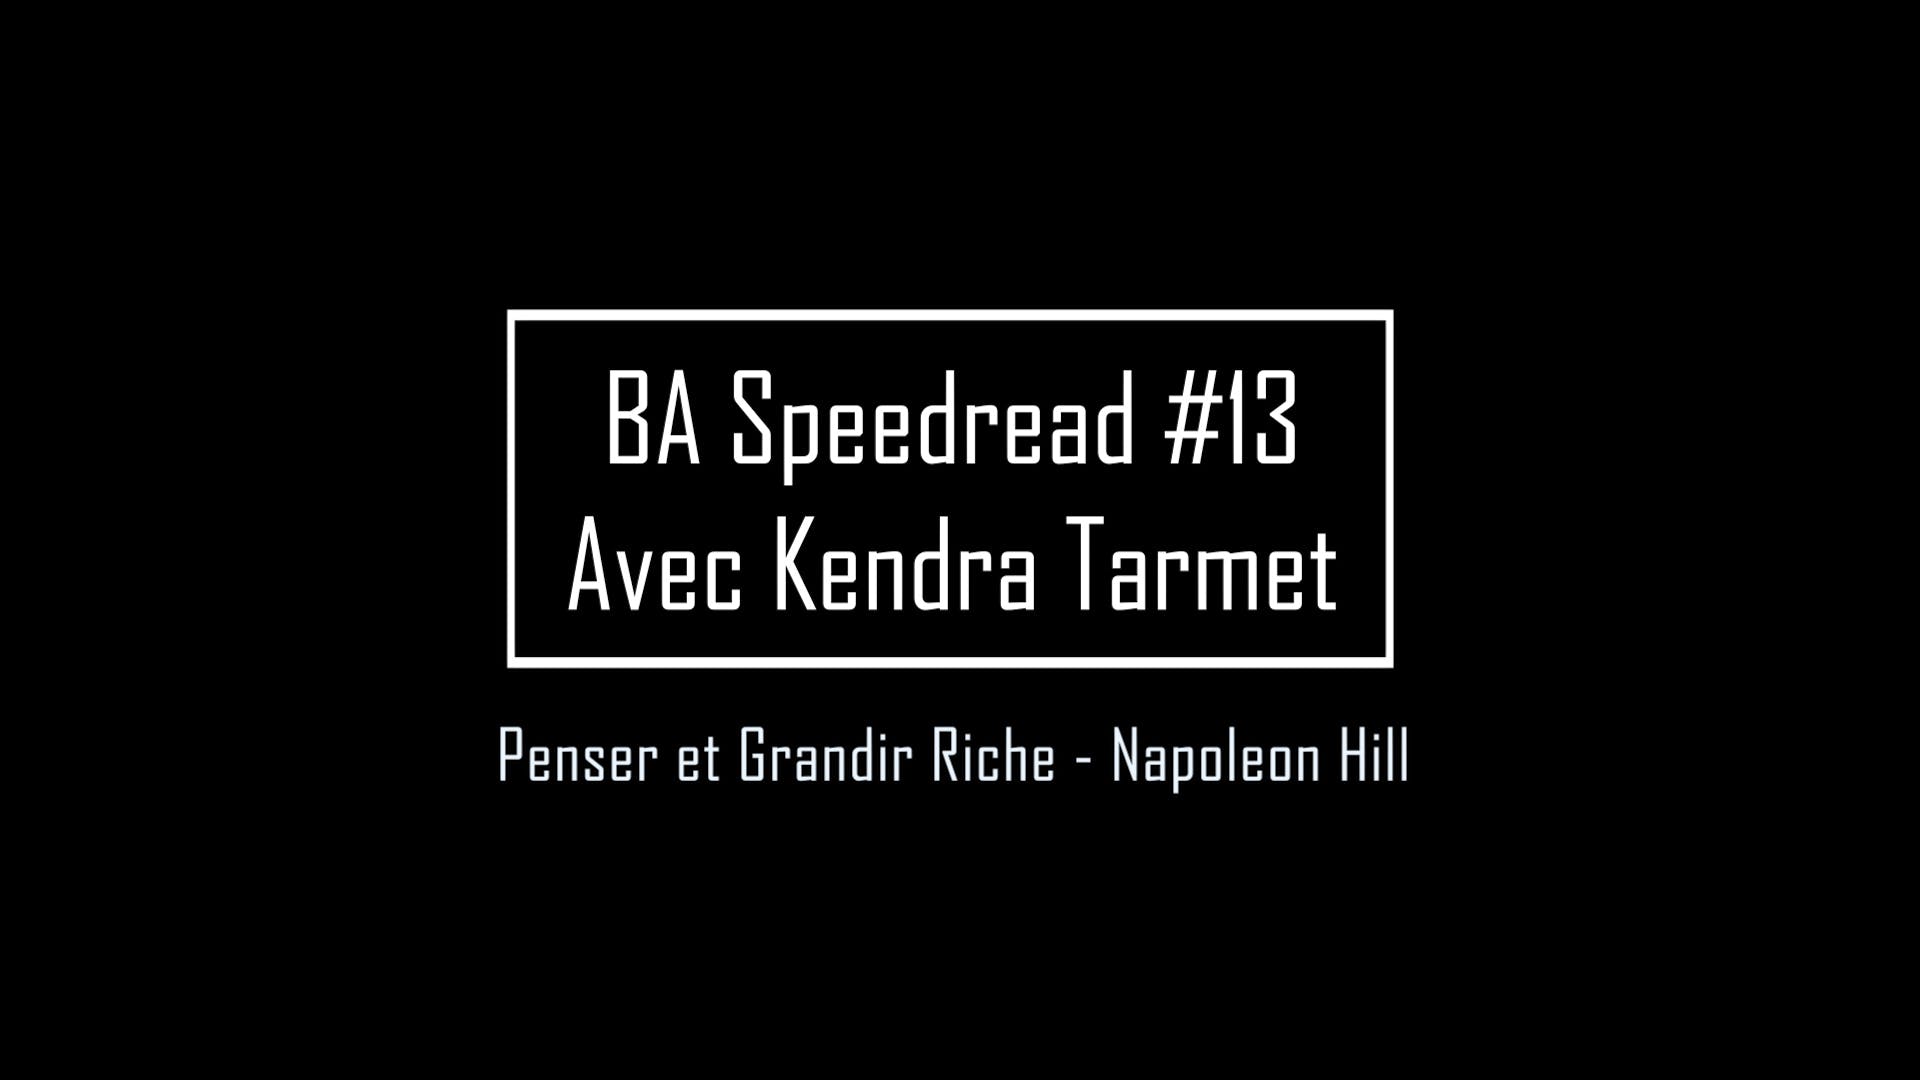 BA Speedread #13 avec Kendra : Pense et Grandis Riche